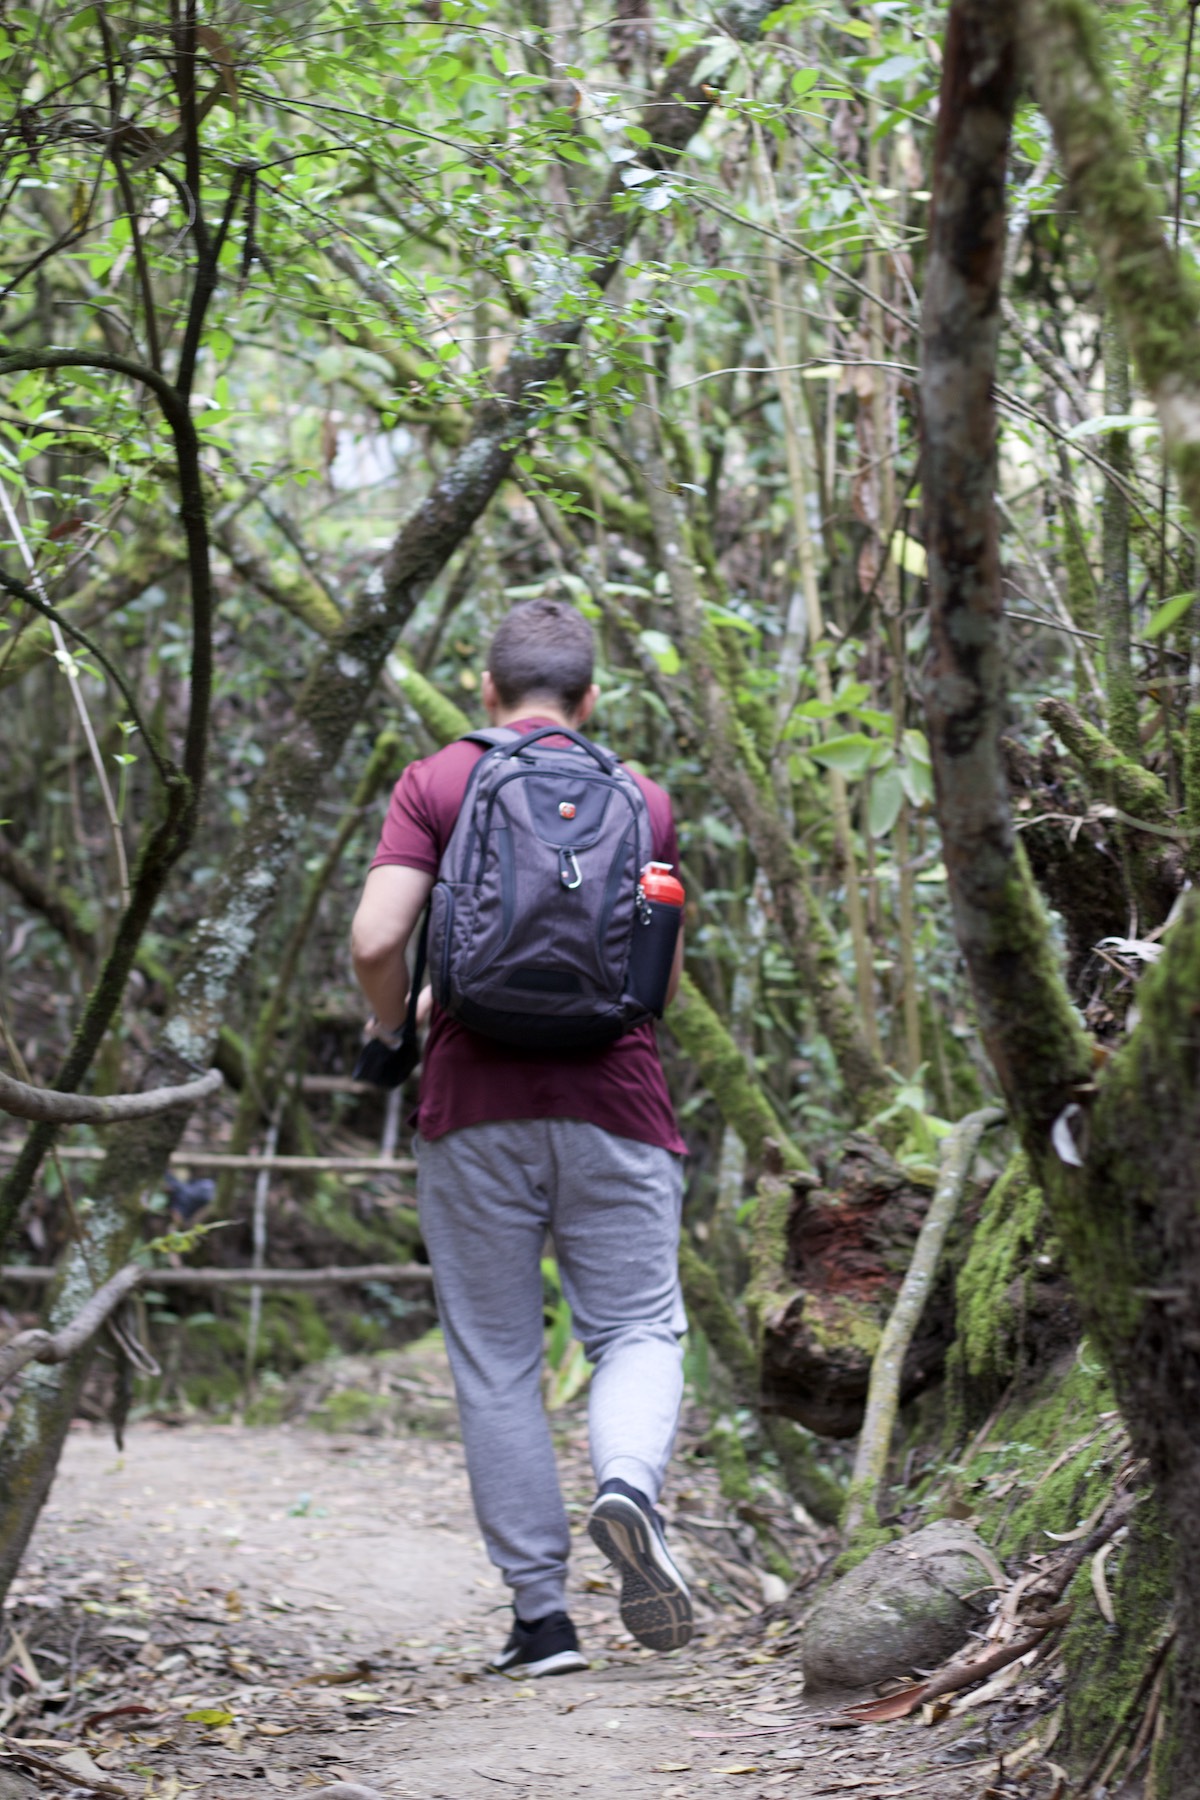 Hiking paths in Amaru Zoológico Bioparque